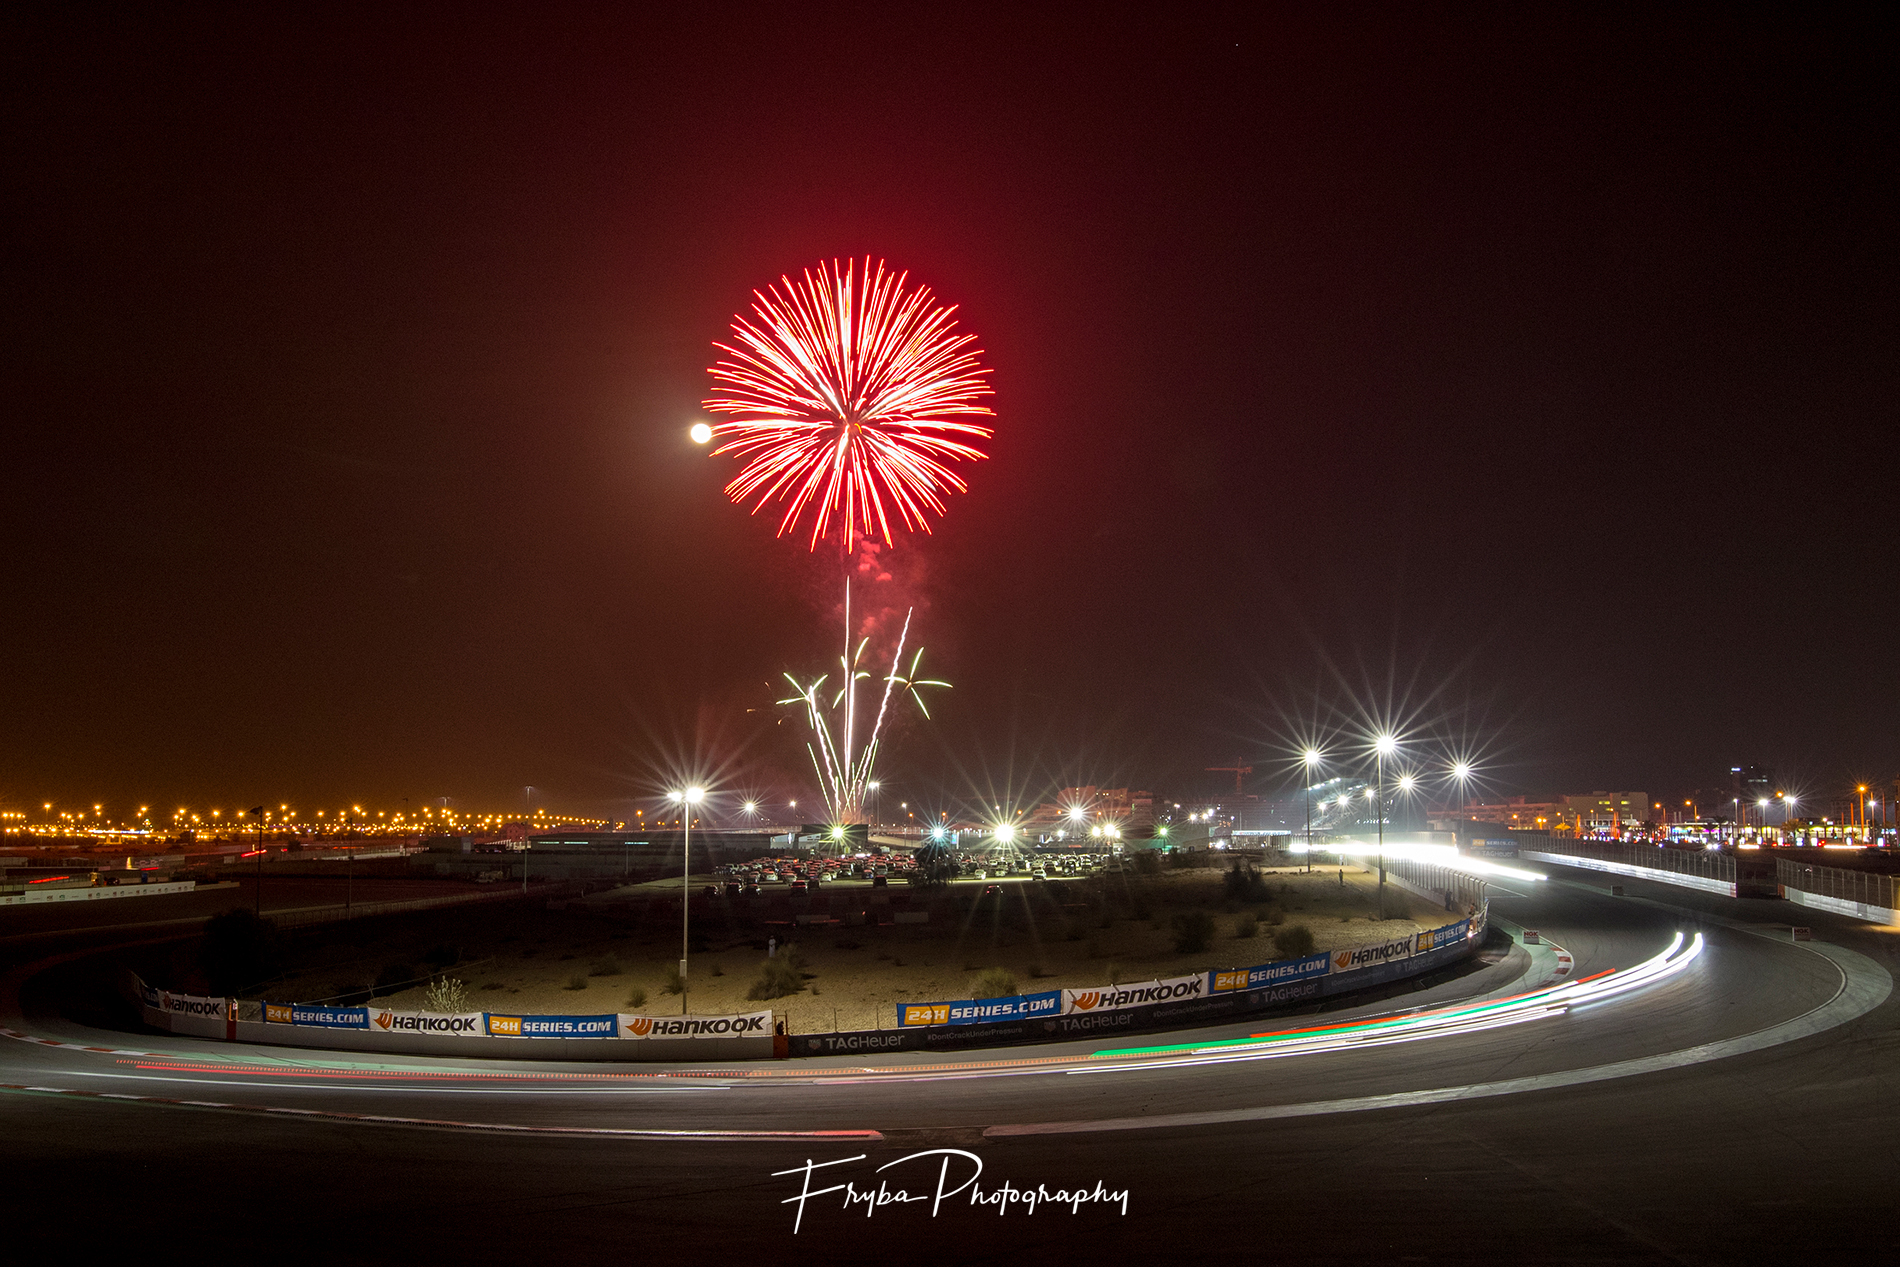 24h Dubai 2017 fireworks